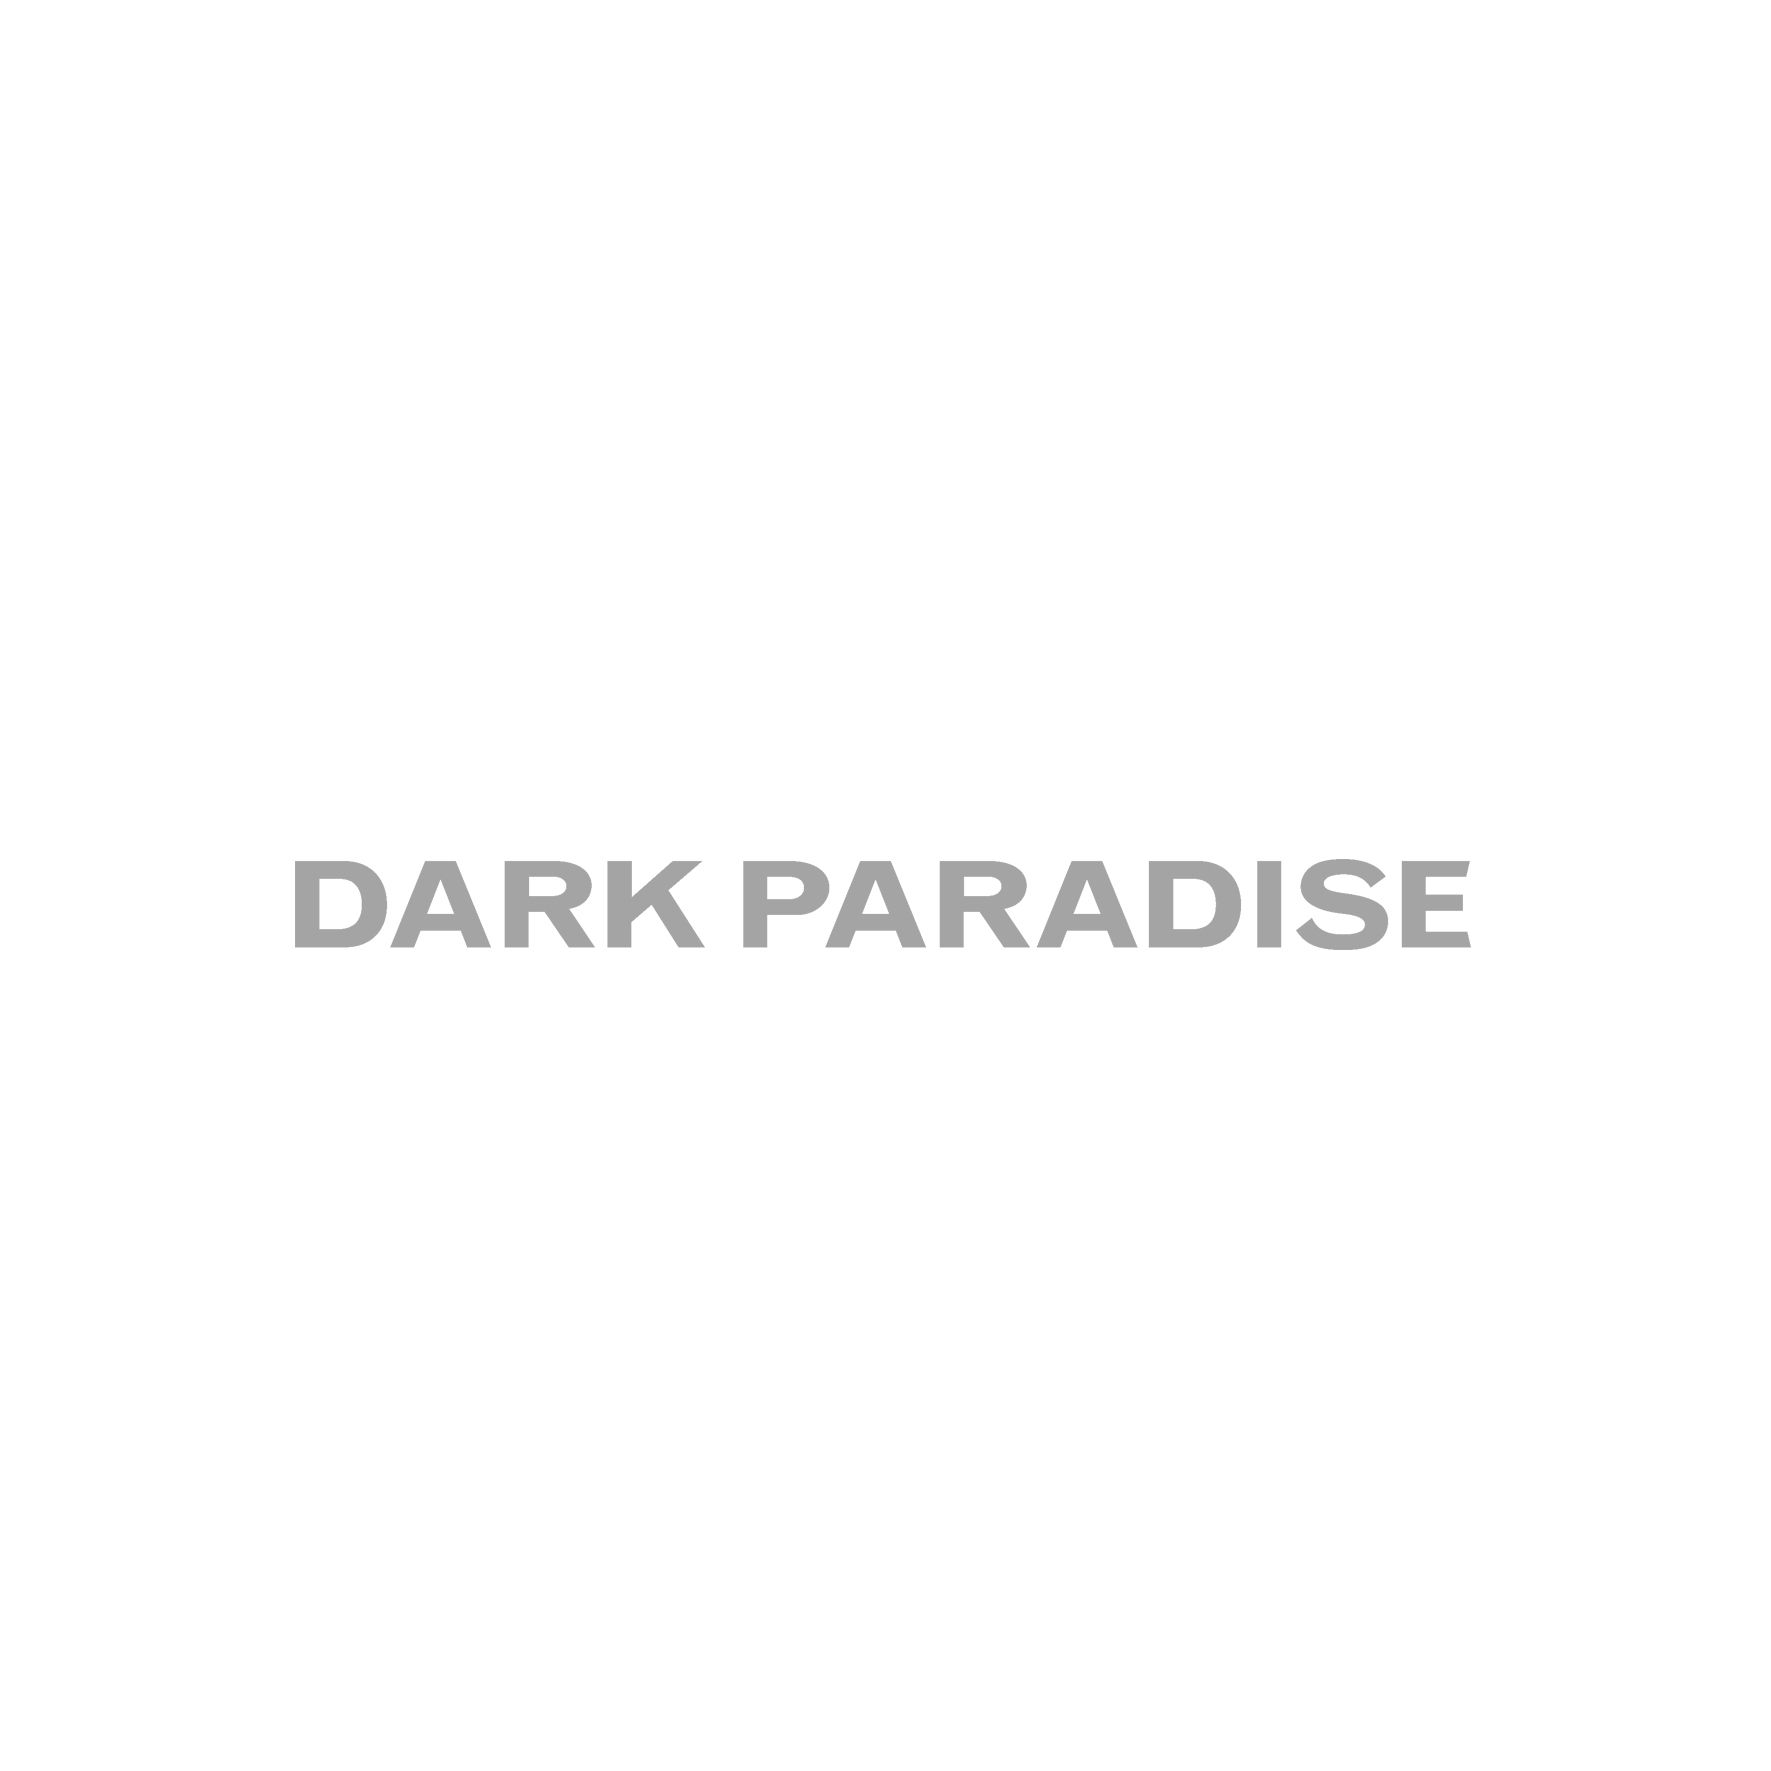 DarkParadise